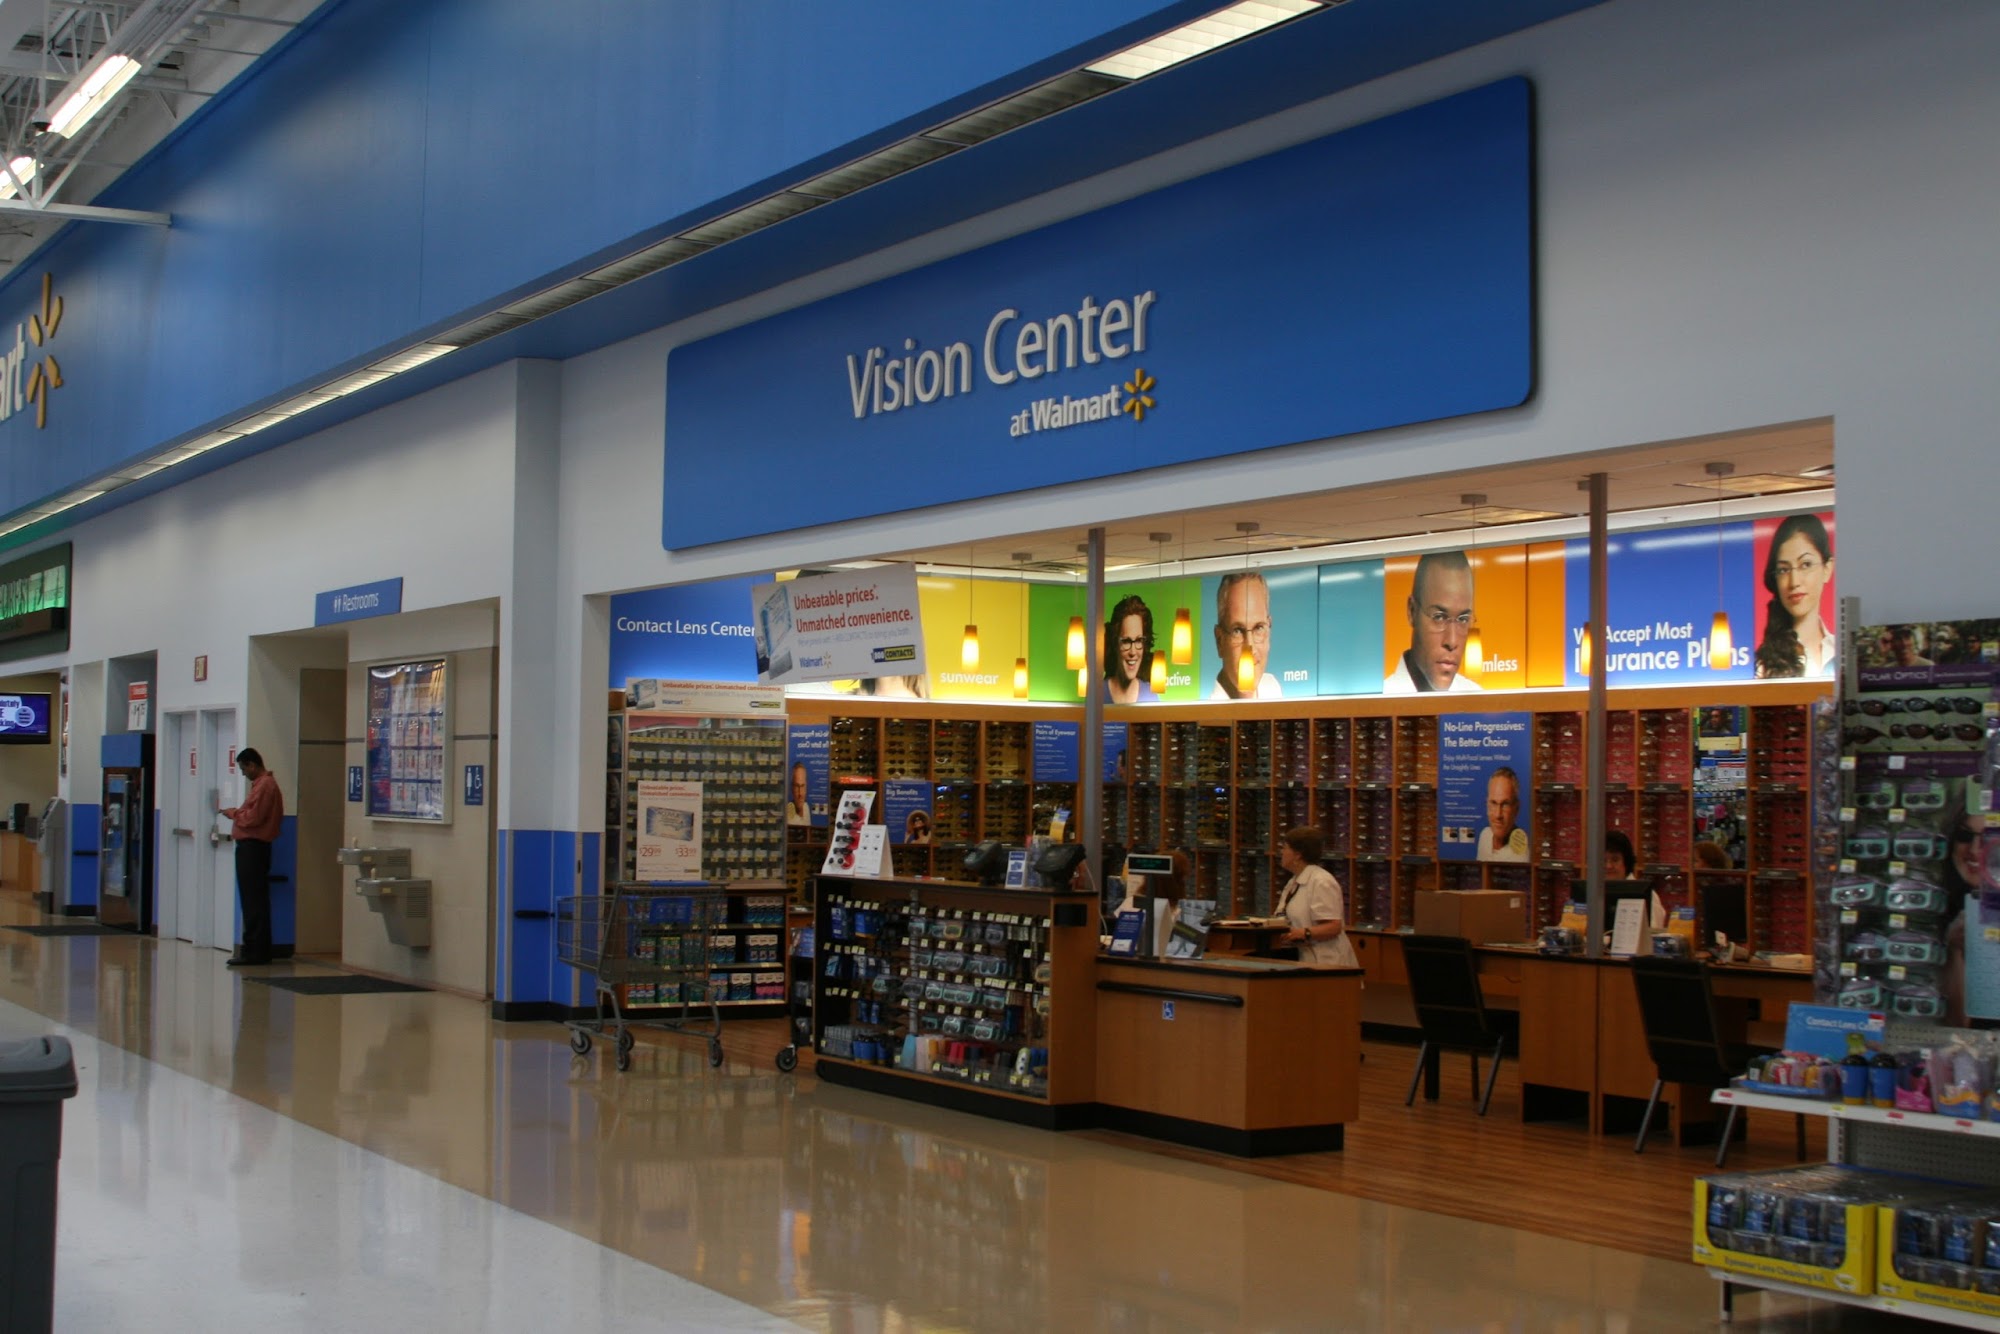 Walmart Vision & Glasses 7011 Main St, American Canyon California 94503